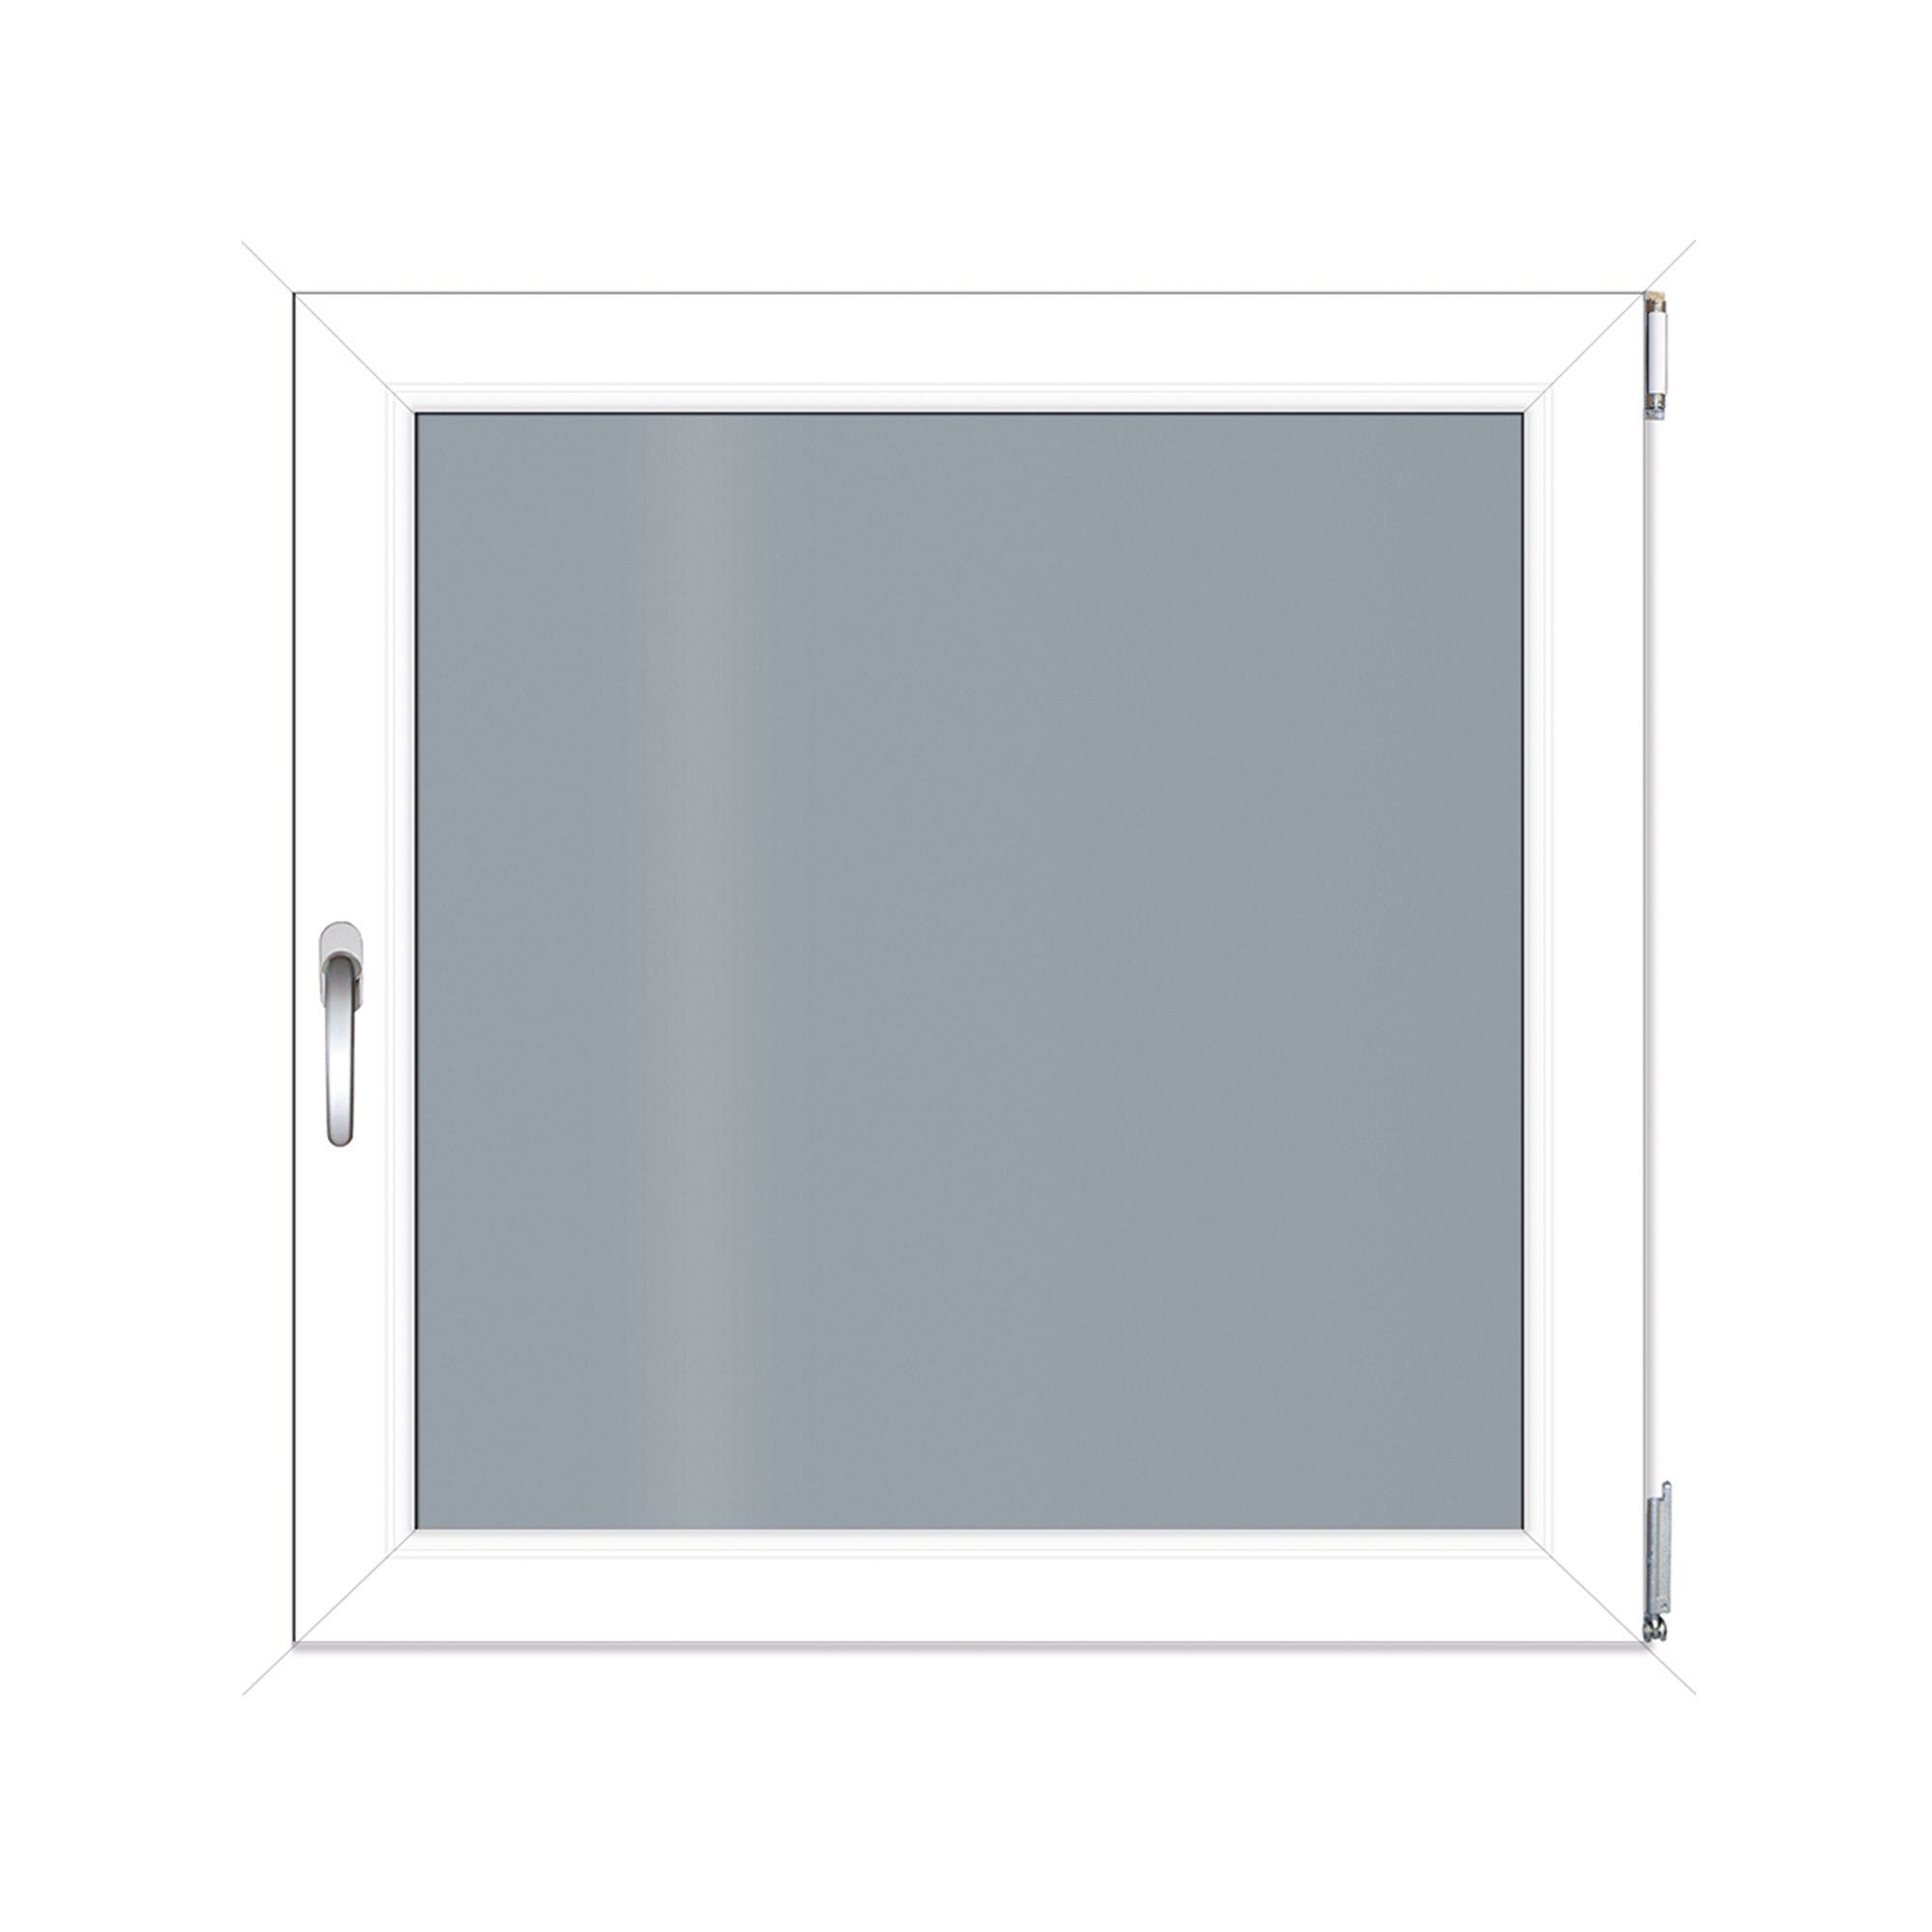 Kunststofffenster 500 x 500 mm weiß DIN rechts + product picture